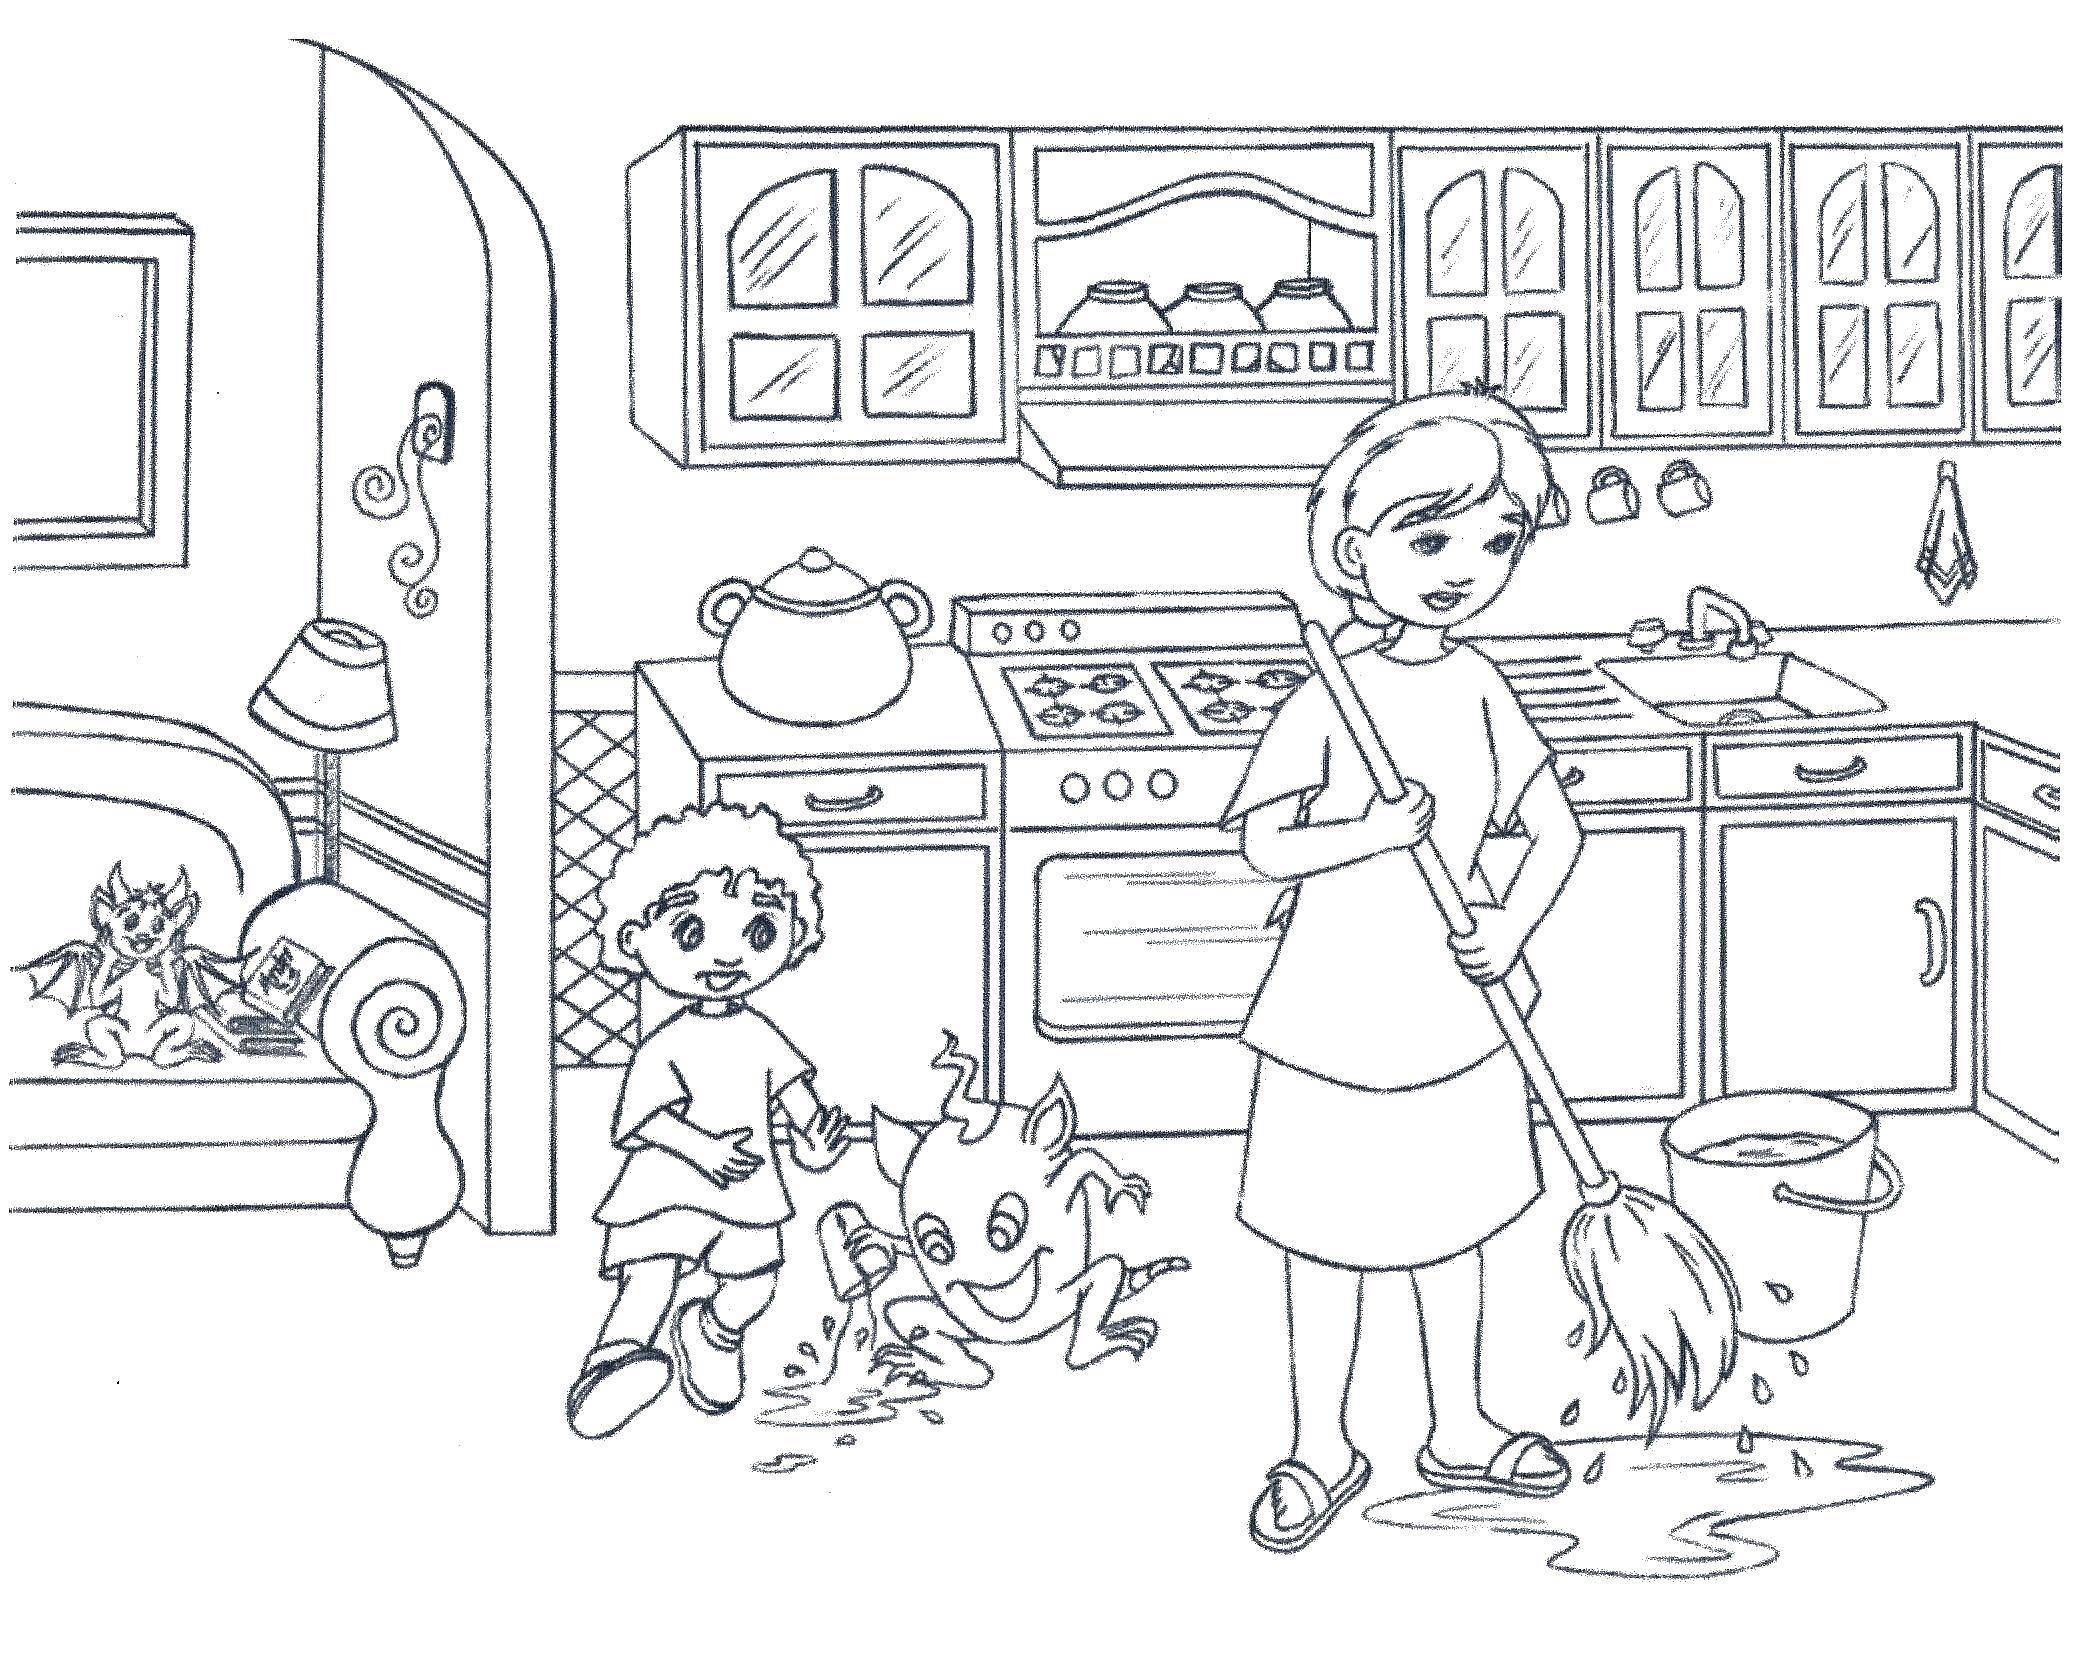 Название: Раскраска Мама моет кухню. Категория: Кухня. Теги: кухня, мама, уборка.